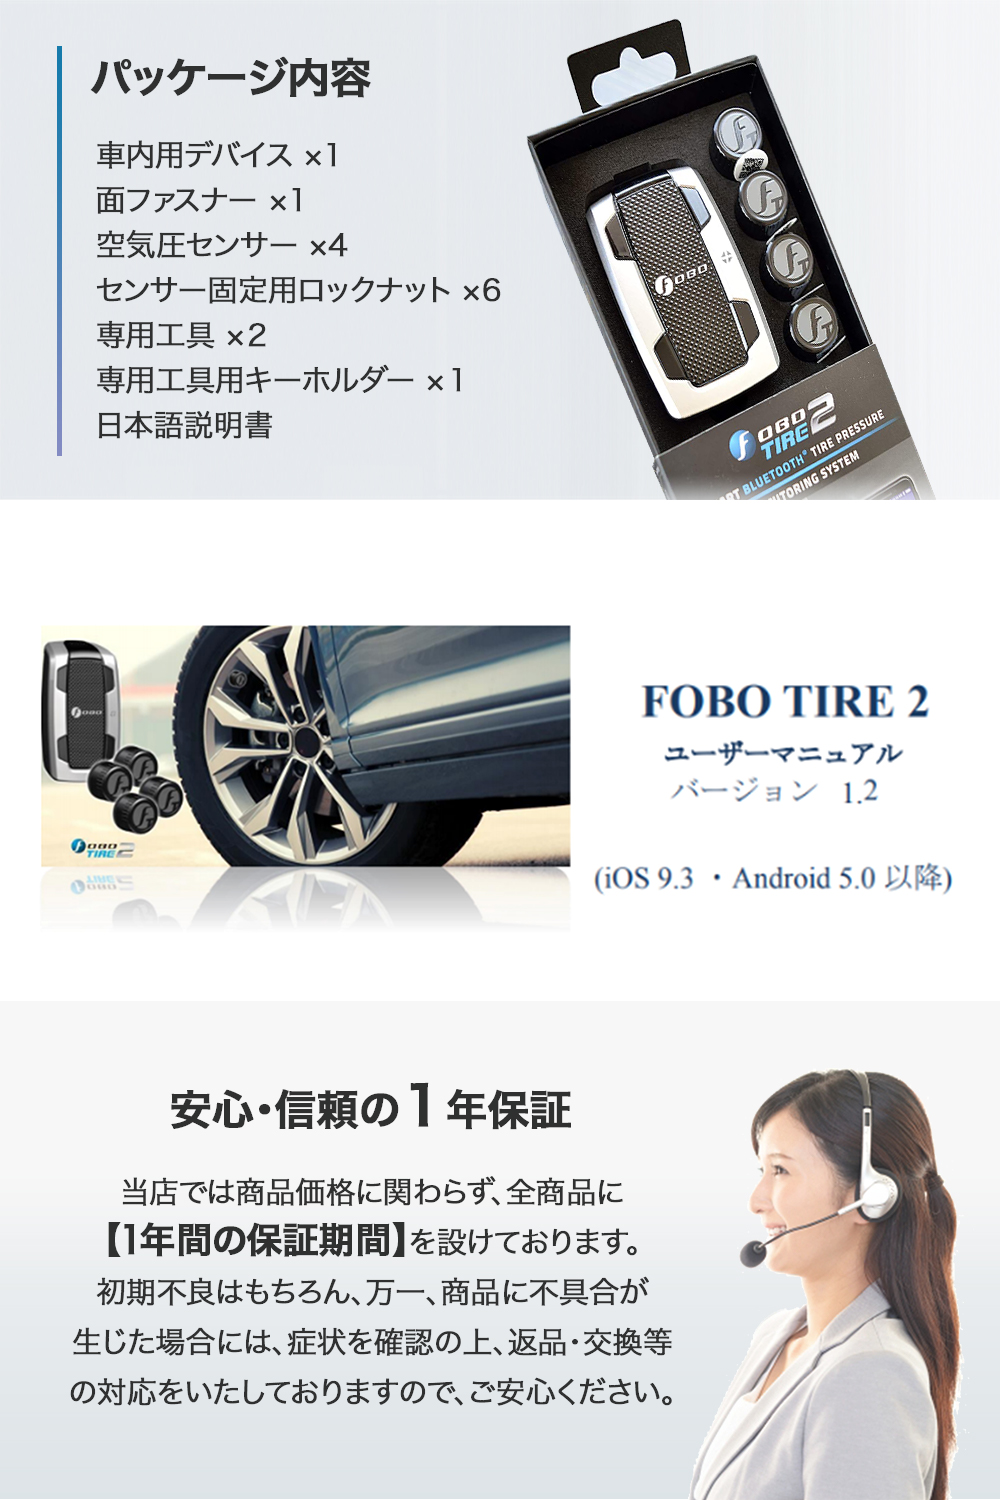 FOBO Tire TPMS 空気圧センサー 車 スマホでチェック タイヤ空気圧監視システム 取付簡単 防水 技適取得 日本語説明書付属